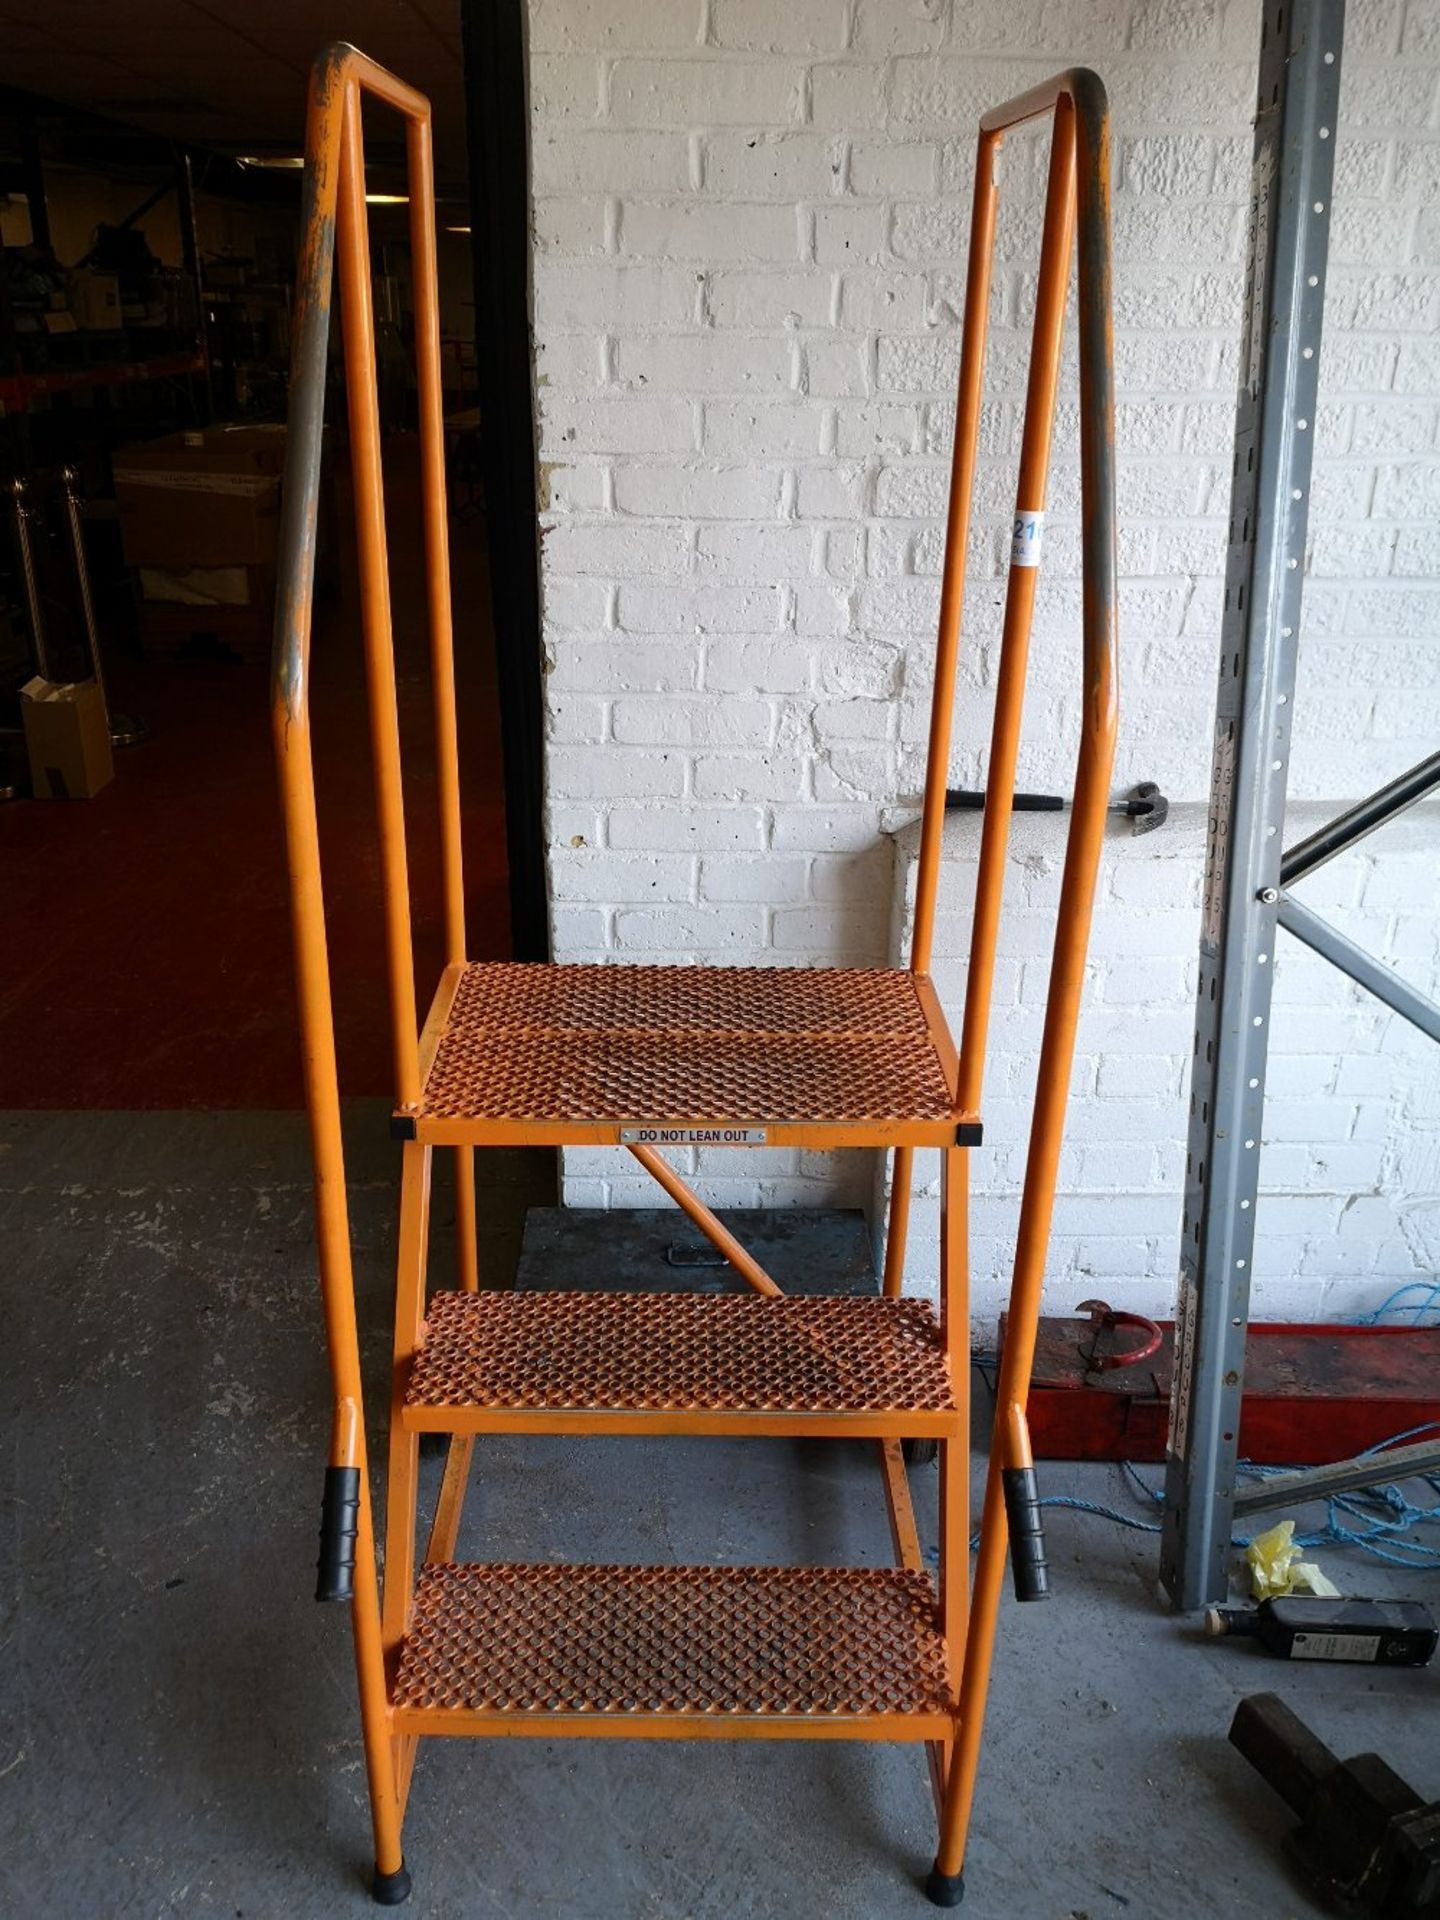 Three Tread Mobile Warehouse Ladder - Image 2 of 3